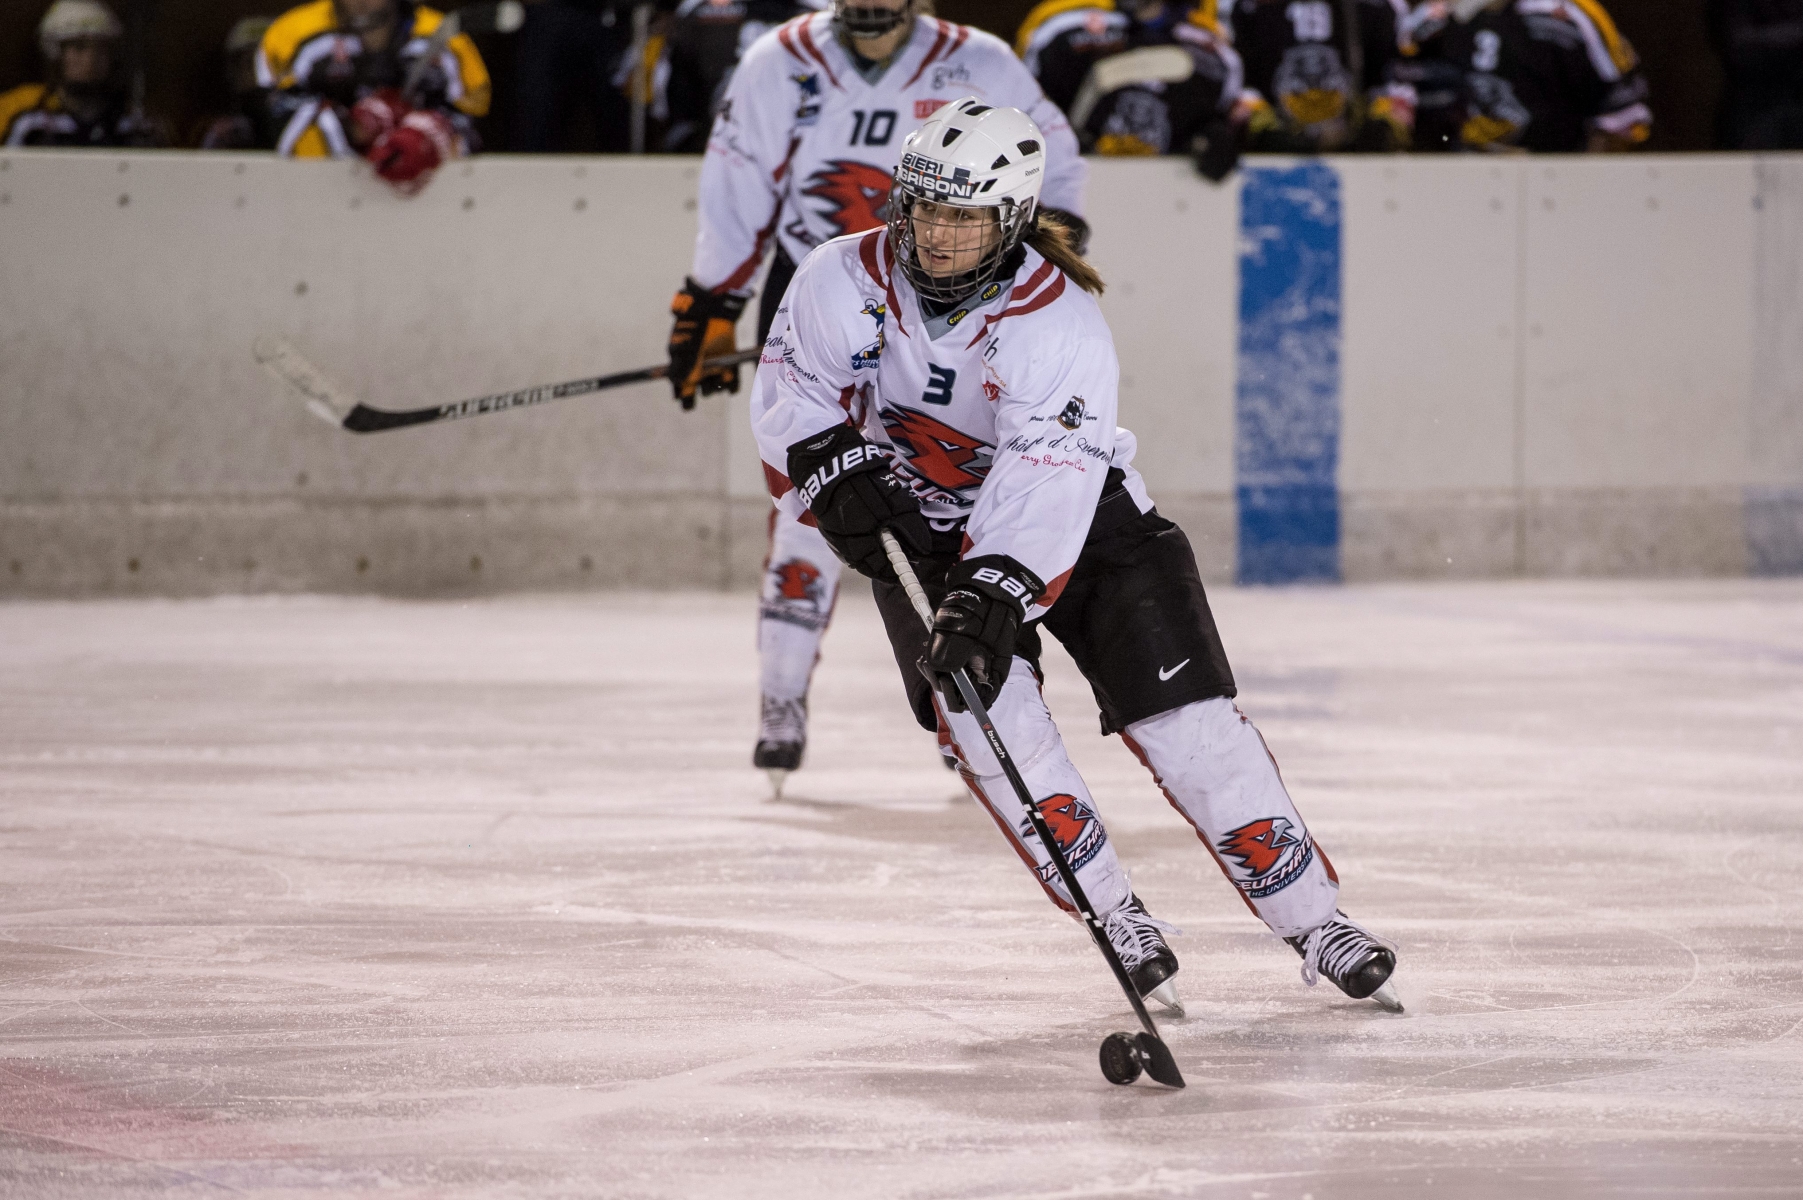 Hockey LNA feminin :  HC Universite Neuchatel - HC Lugano
Sarah Forster (3)

Les Ponts-de-Martel, le 31.01.2016
Photo : Lucas Vuitel HOCKEY SUR GLACE FEMININ